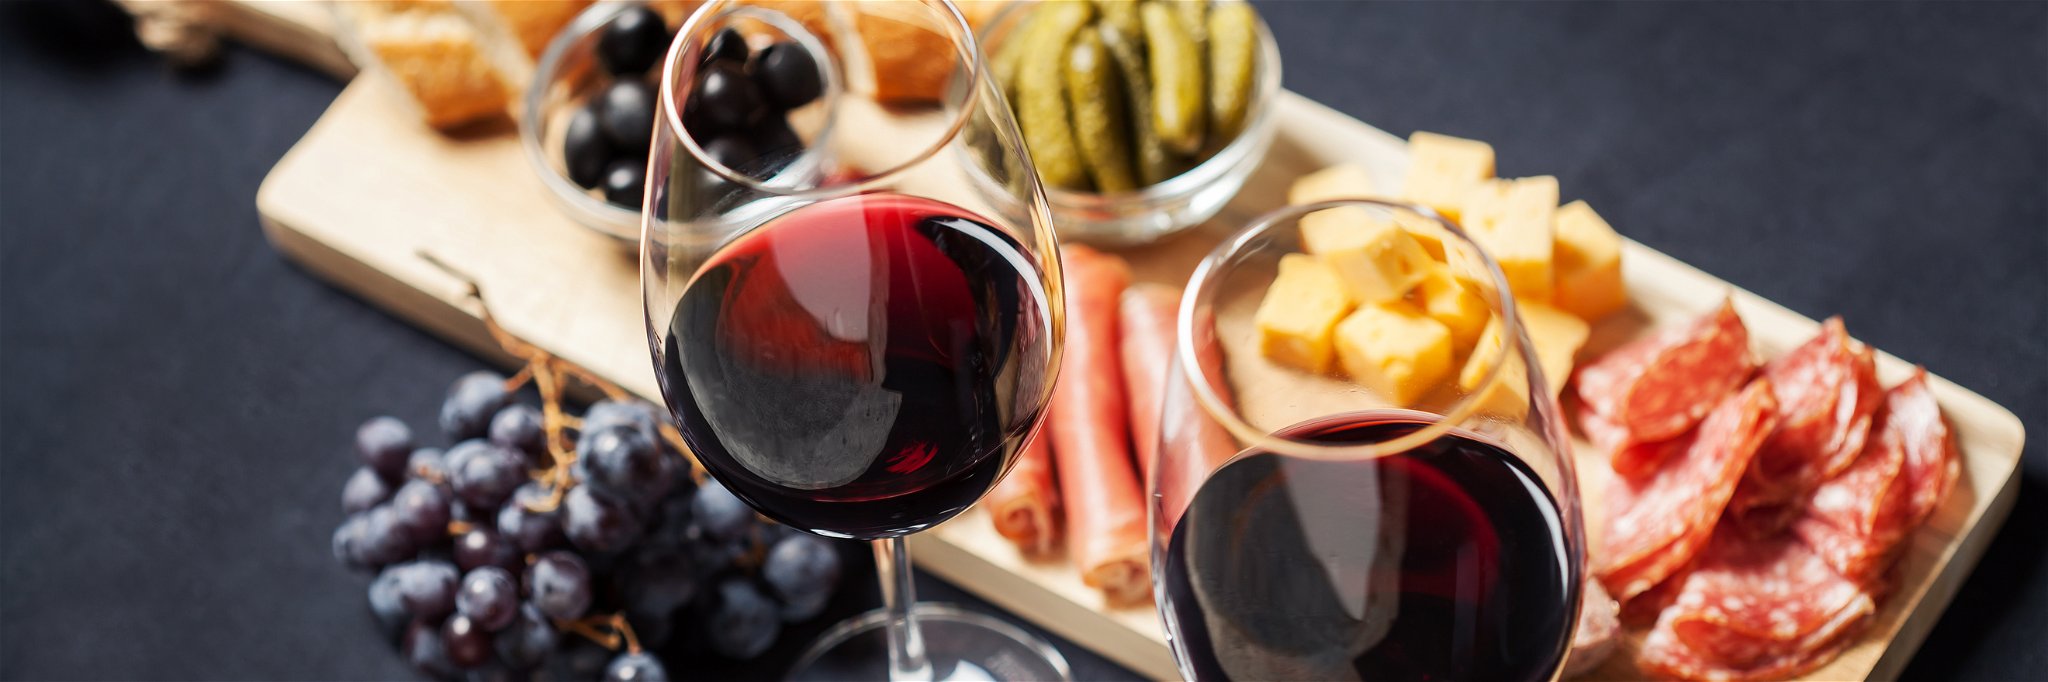 Cabernet Sauvignon&nbsp;is one of the most famous&nbsp;red wine&nbsp;grape&nbsp;varieties.&nbsp;